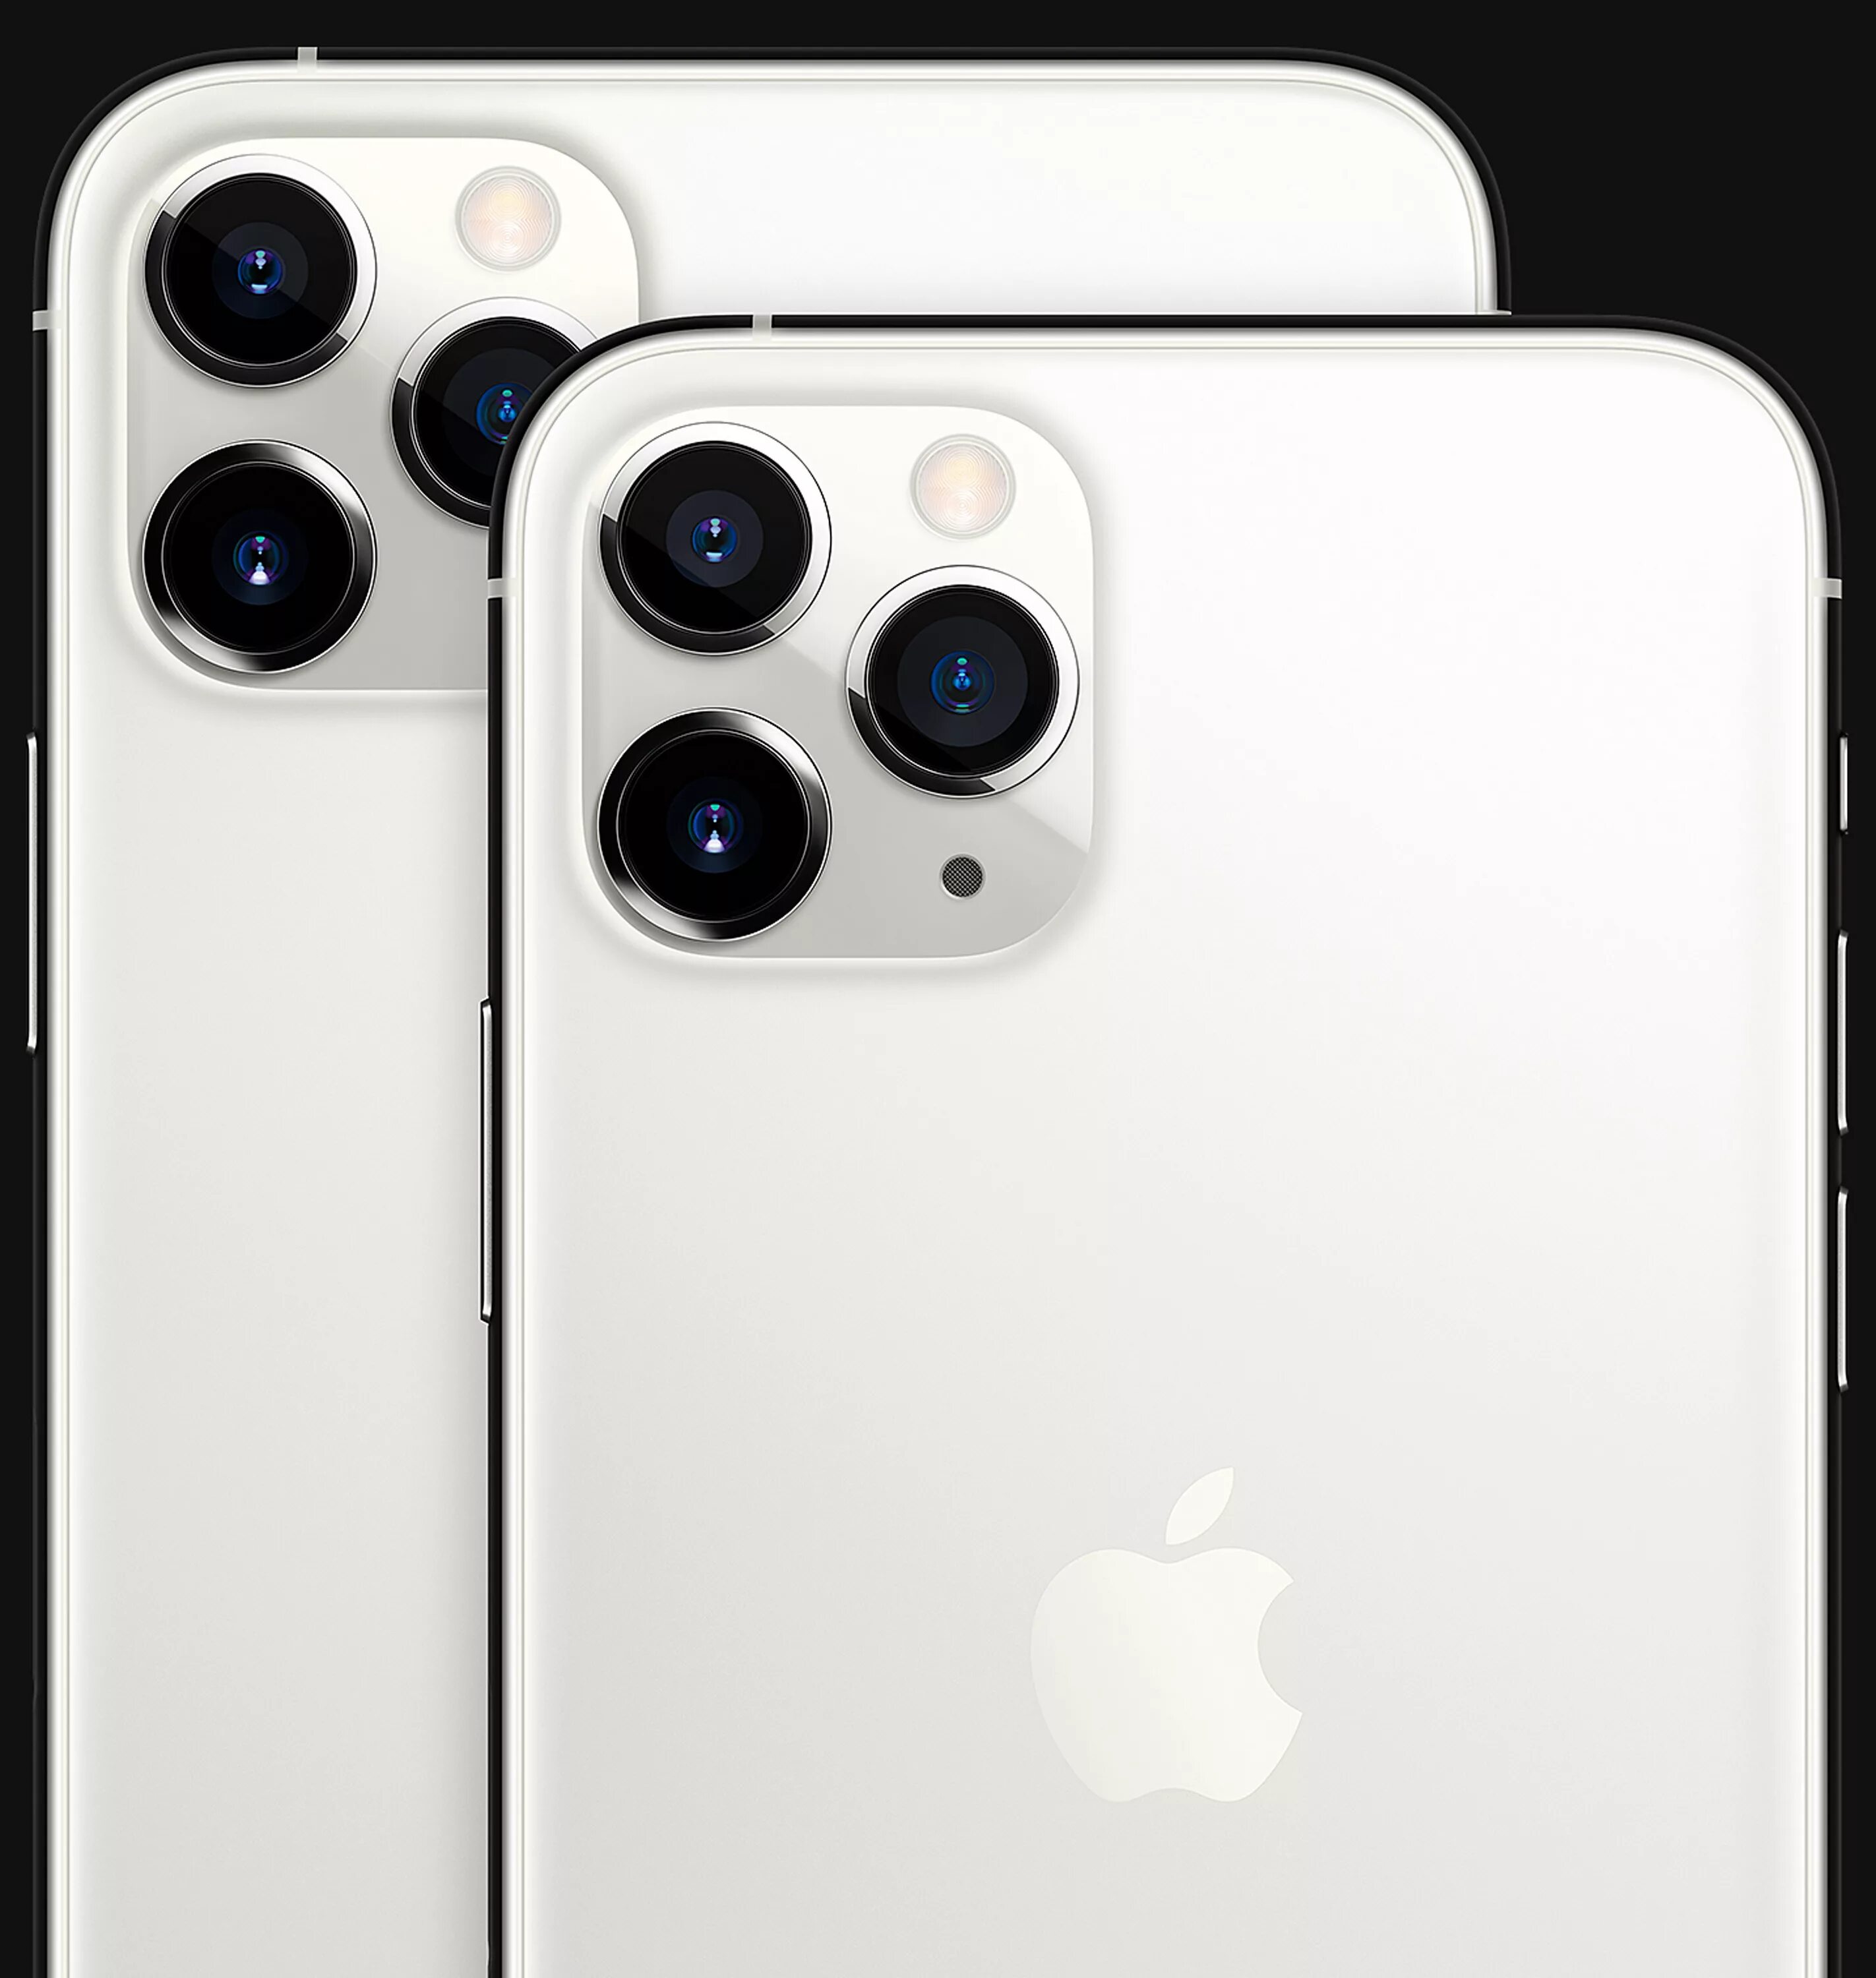 Айфон 15 про белый цвет. Iphone 11 Pro Max Silver. Айфон 12 Промакс белый. Айфон 11 Промакс белый. Айфон 13 Промакс белый.